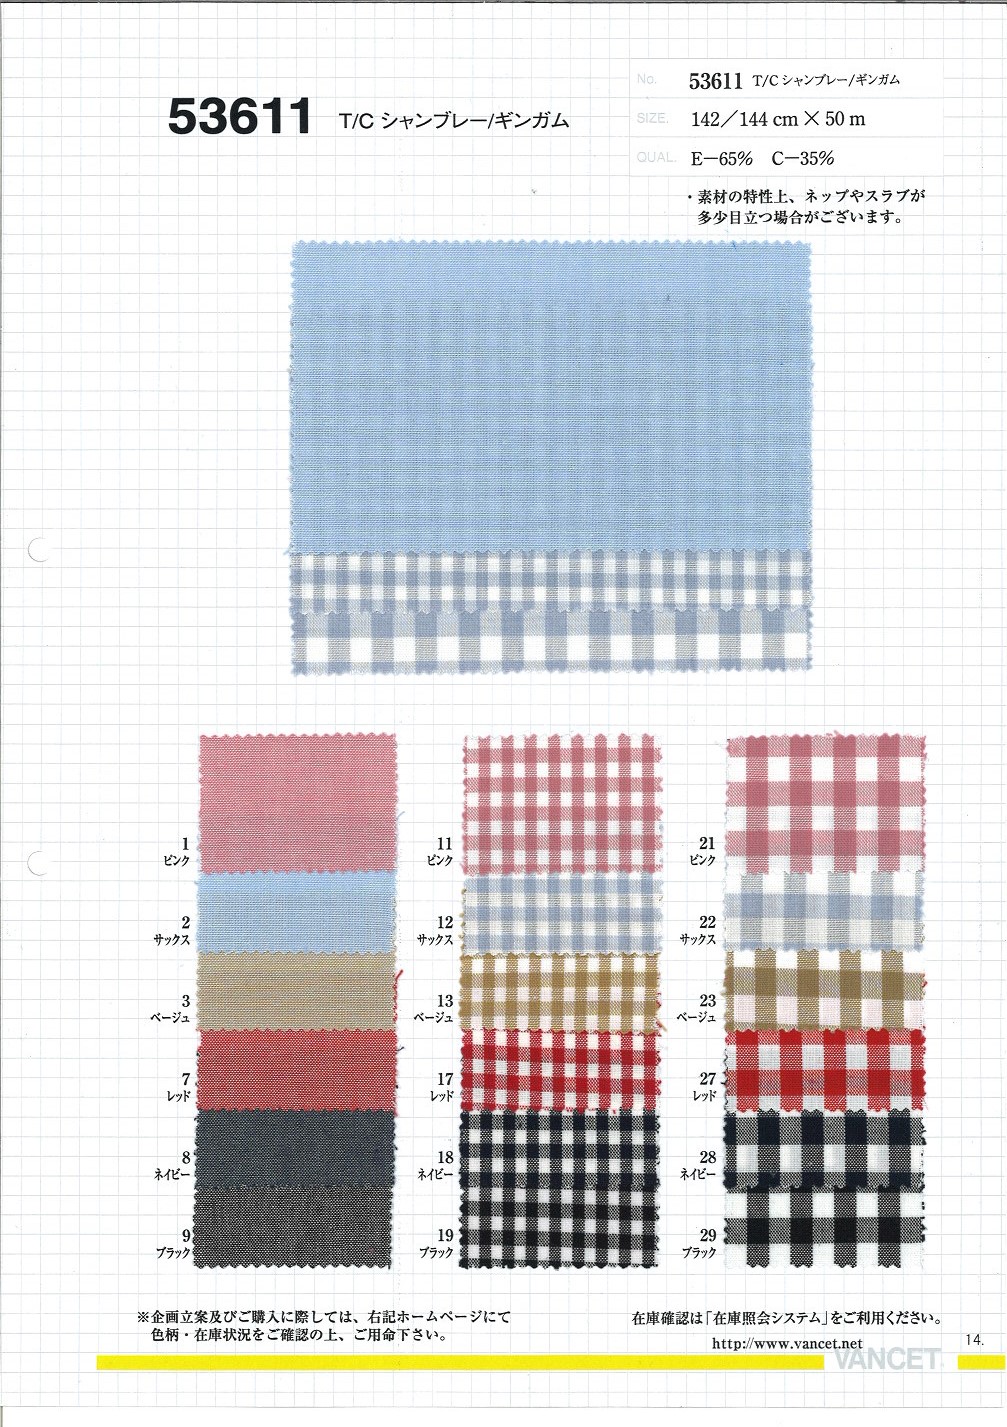 53611 T/C Chambray/Gingham[Fabrica Textil] VANCET